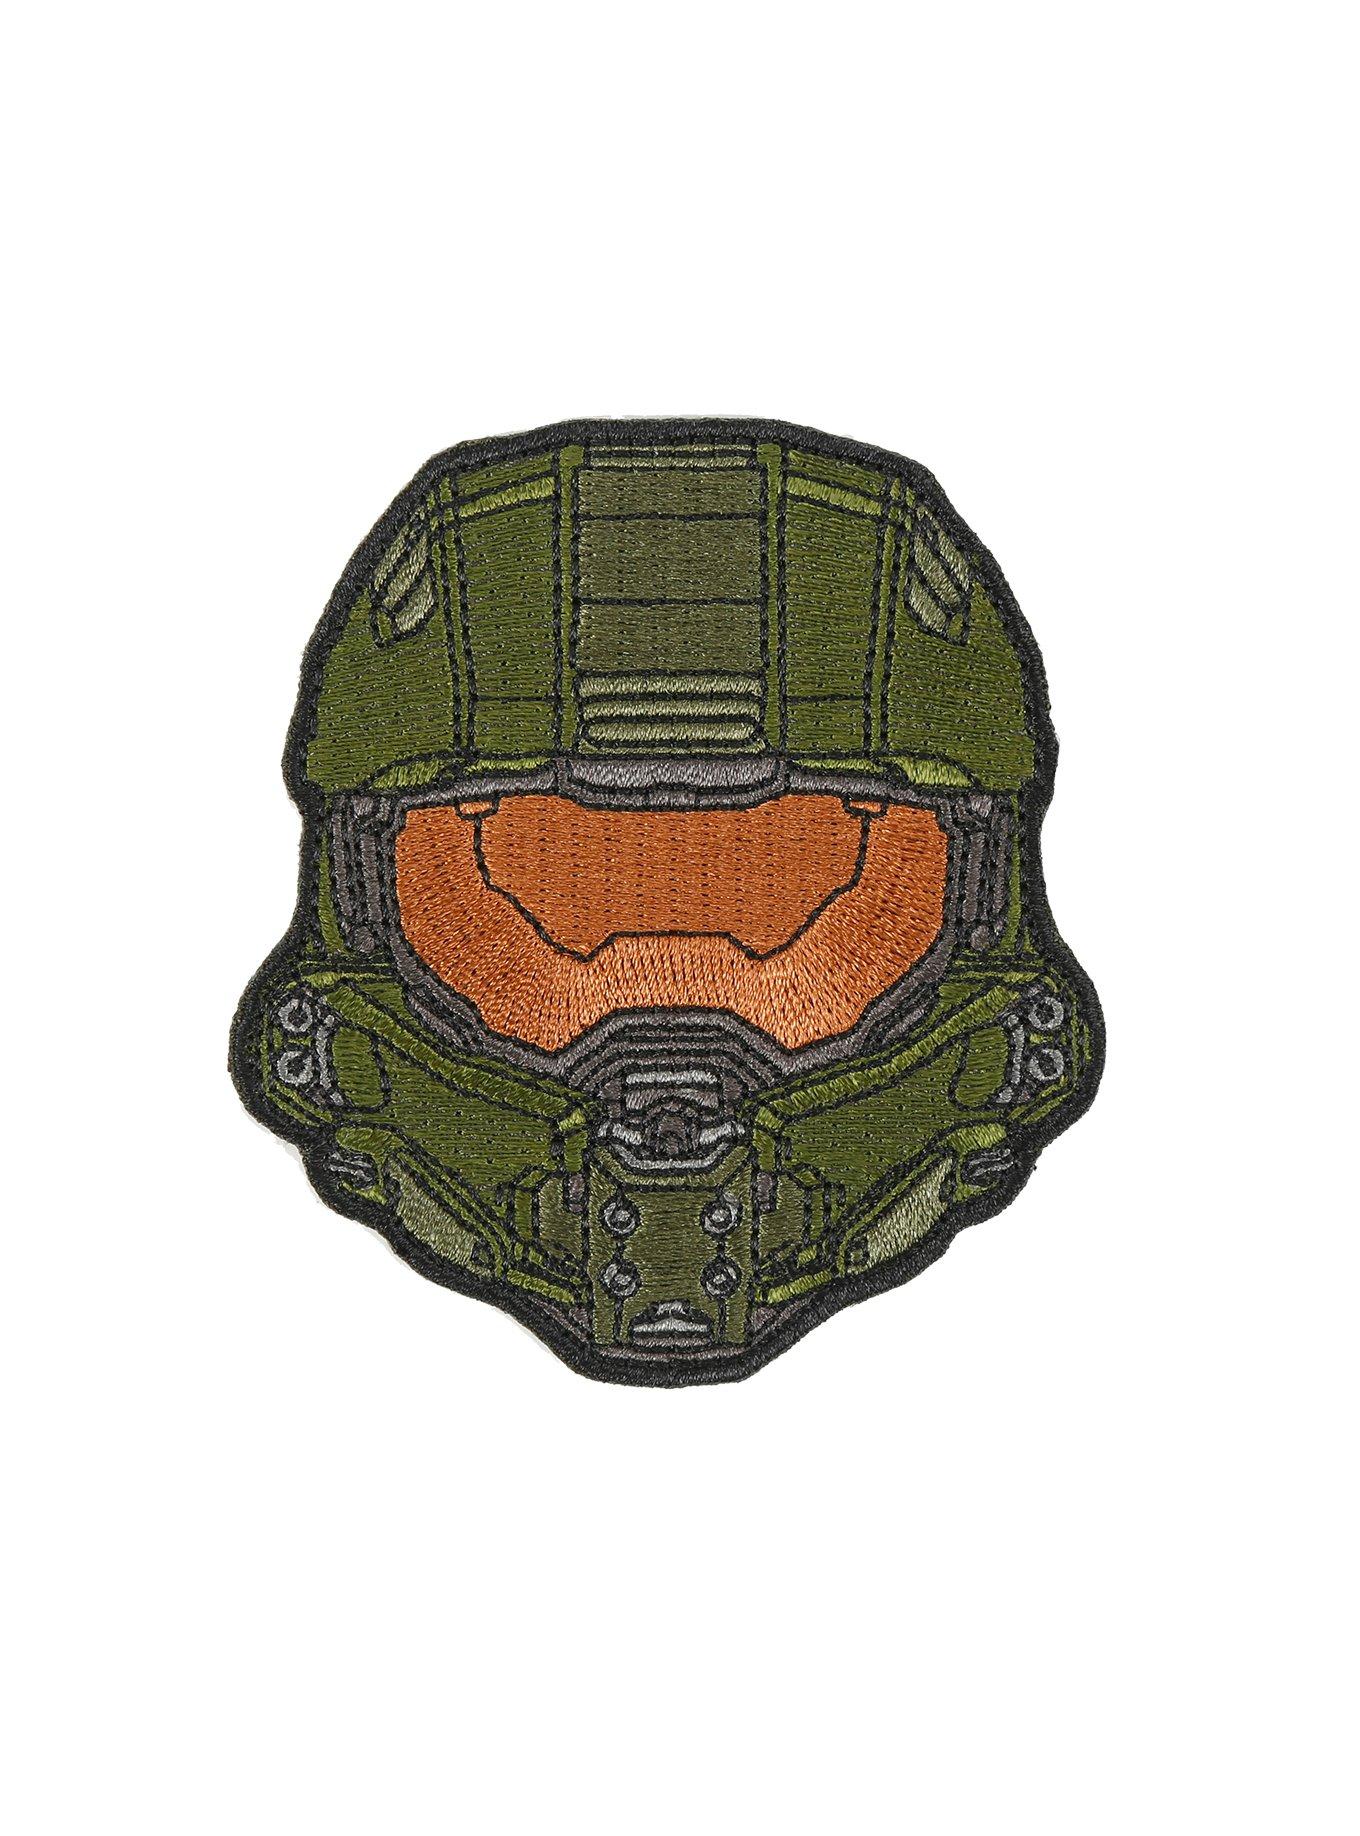 Halo Master Chief Helmet Iron-On Patch, , hi-res